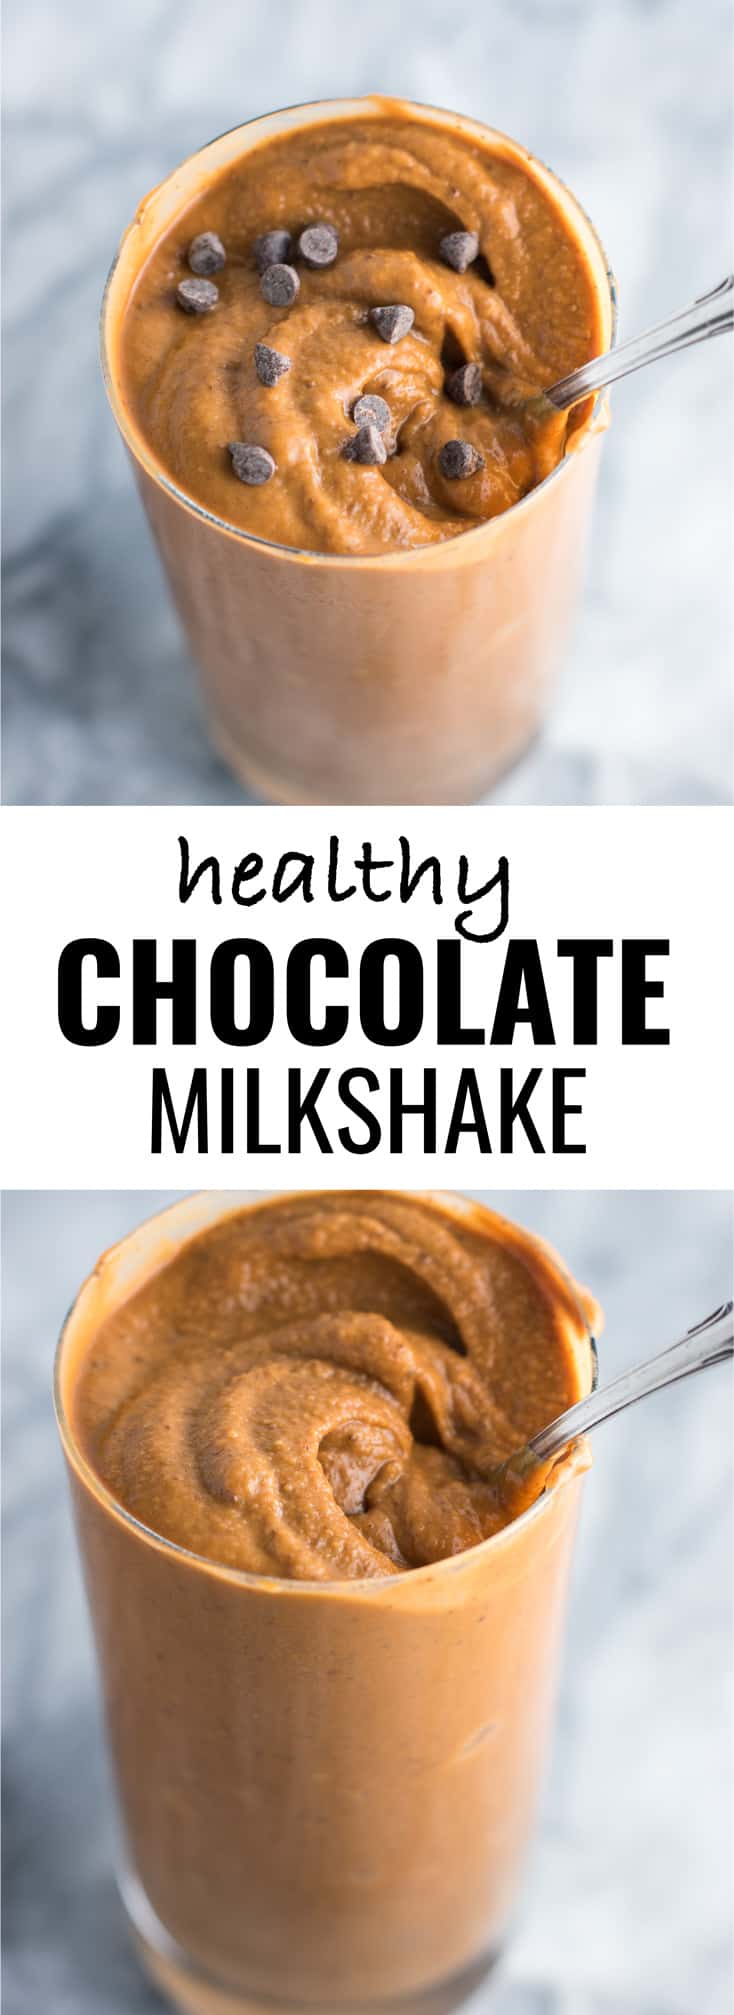 Healthy double chocolate milkshake recipe - you won't believe what the secret ingredient is! #vegan #chocolate #healthychocolatemilkshake #healthydessert